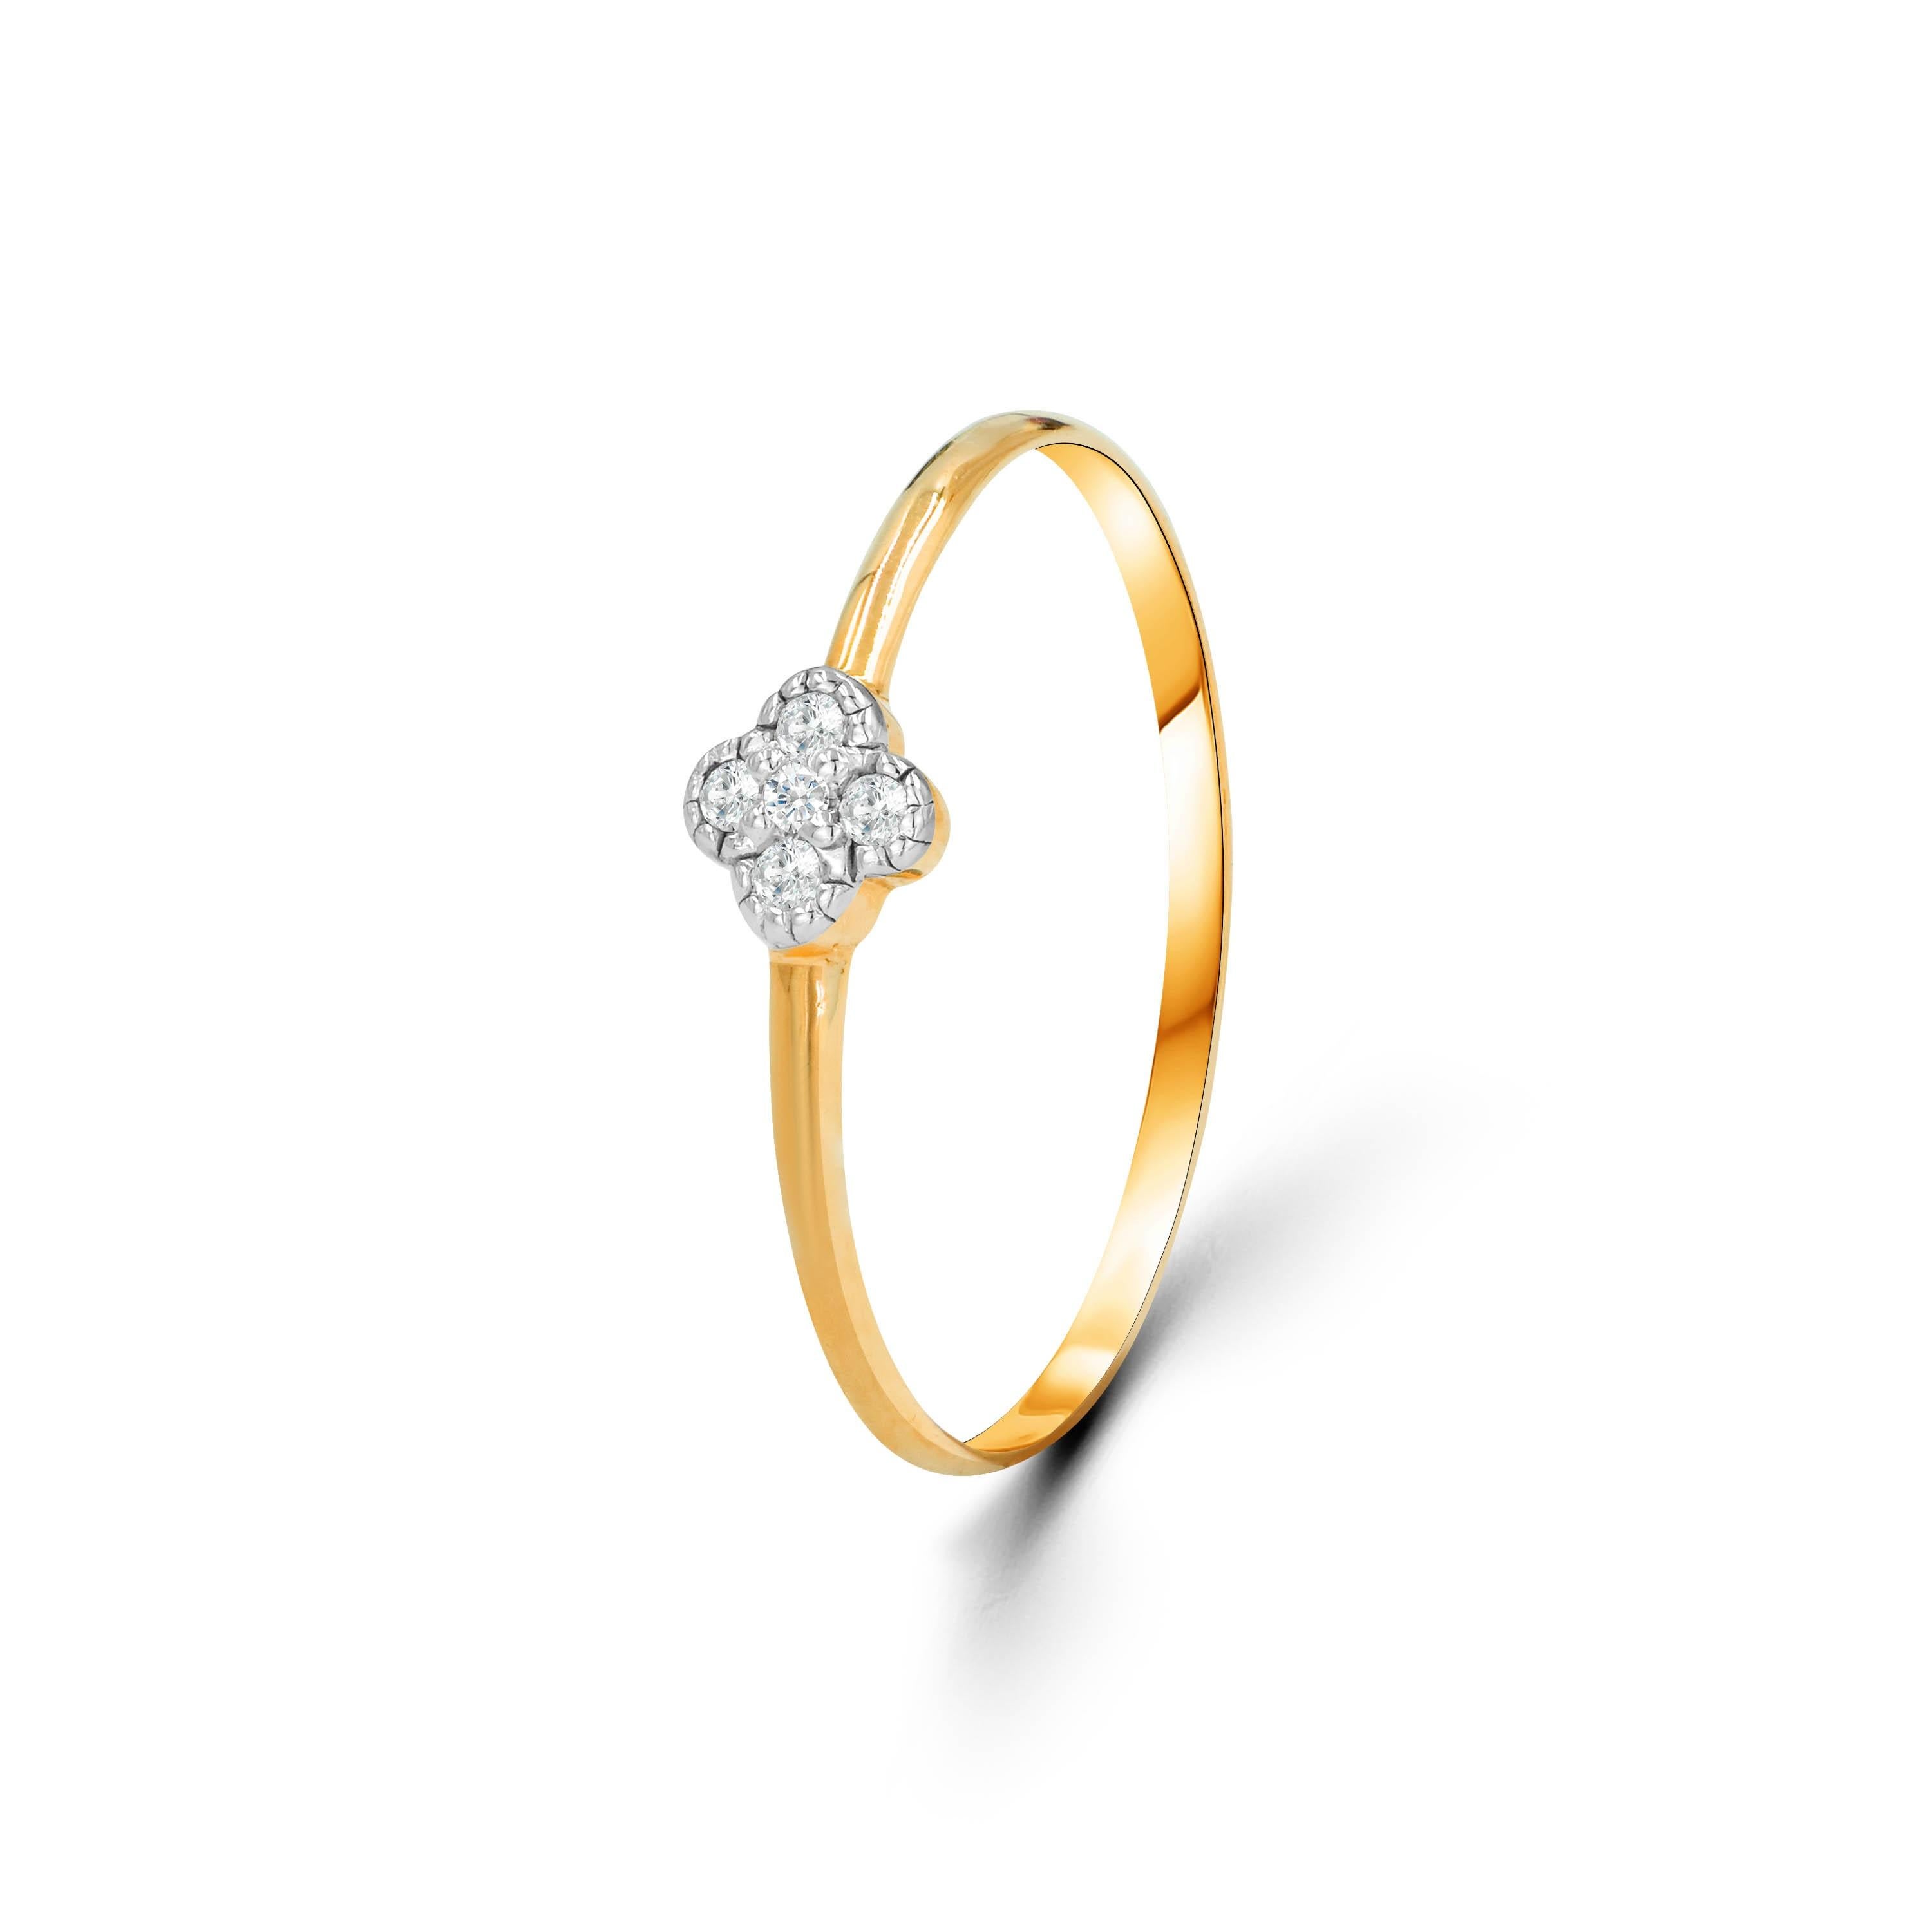 Im Angebot: 14k Gold Kleeblatt-Ring Dainty Minimalistischer Diamantring, stapelbar () 2